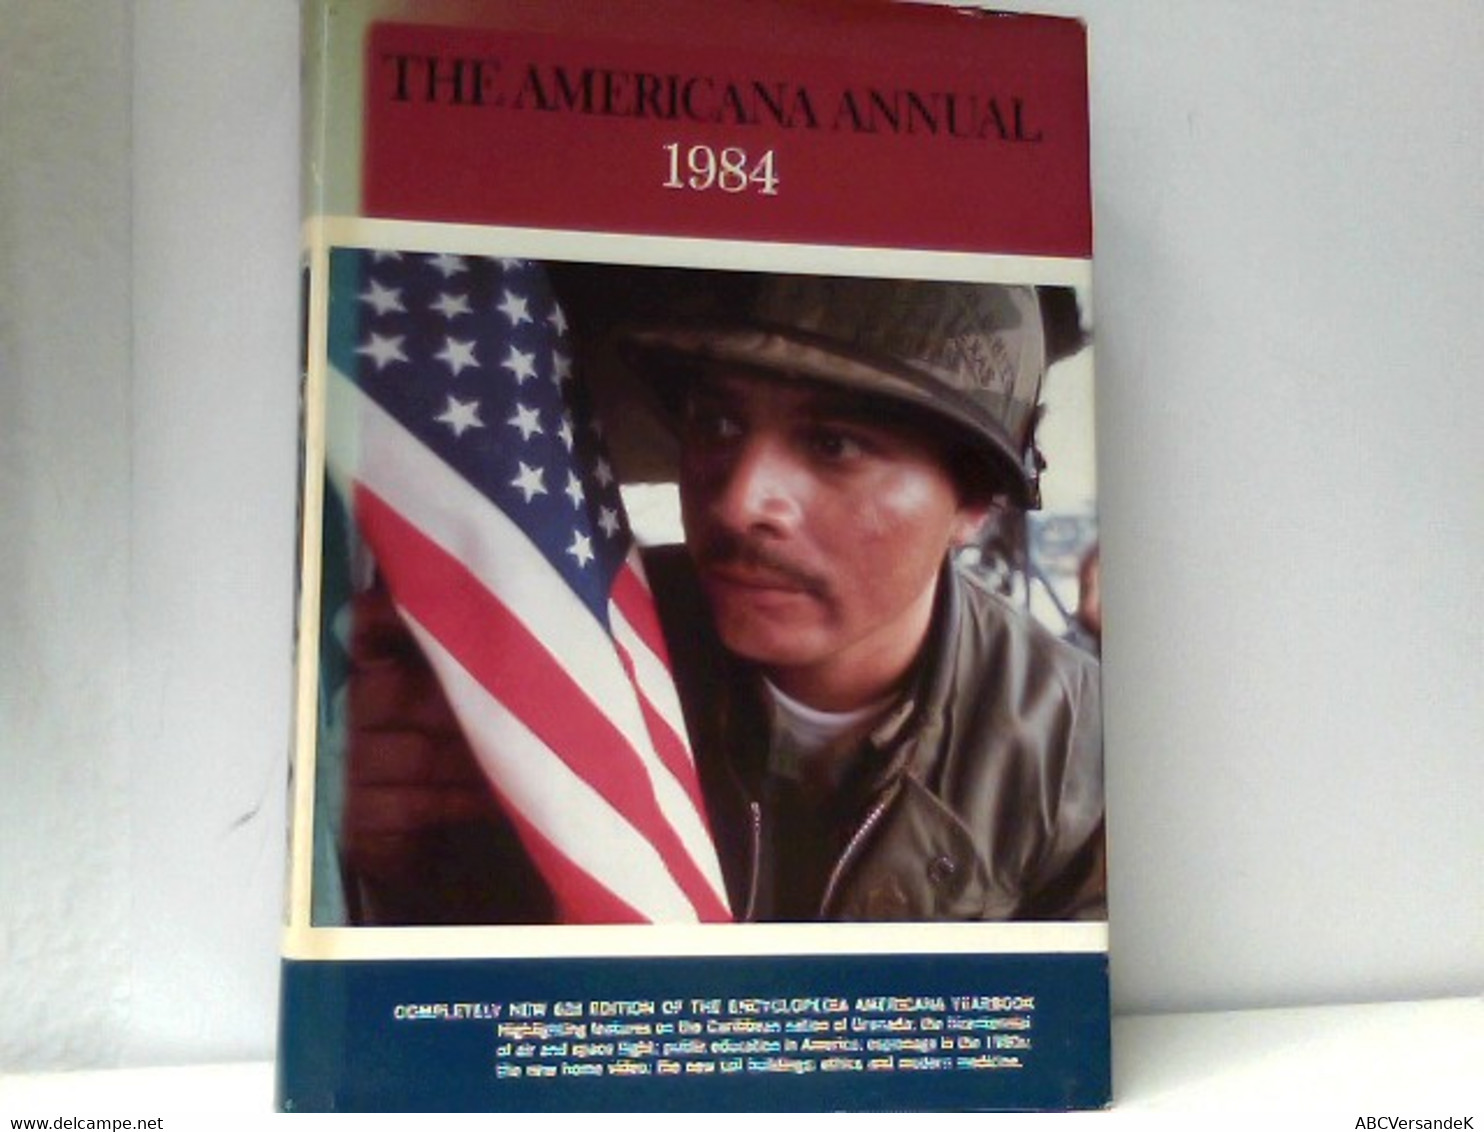 The Americana Annual 1984 - America